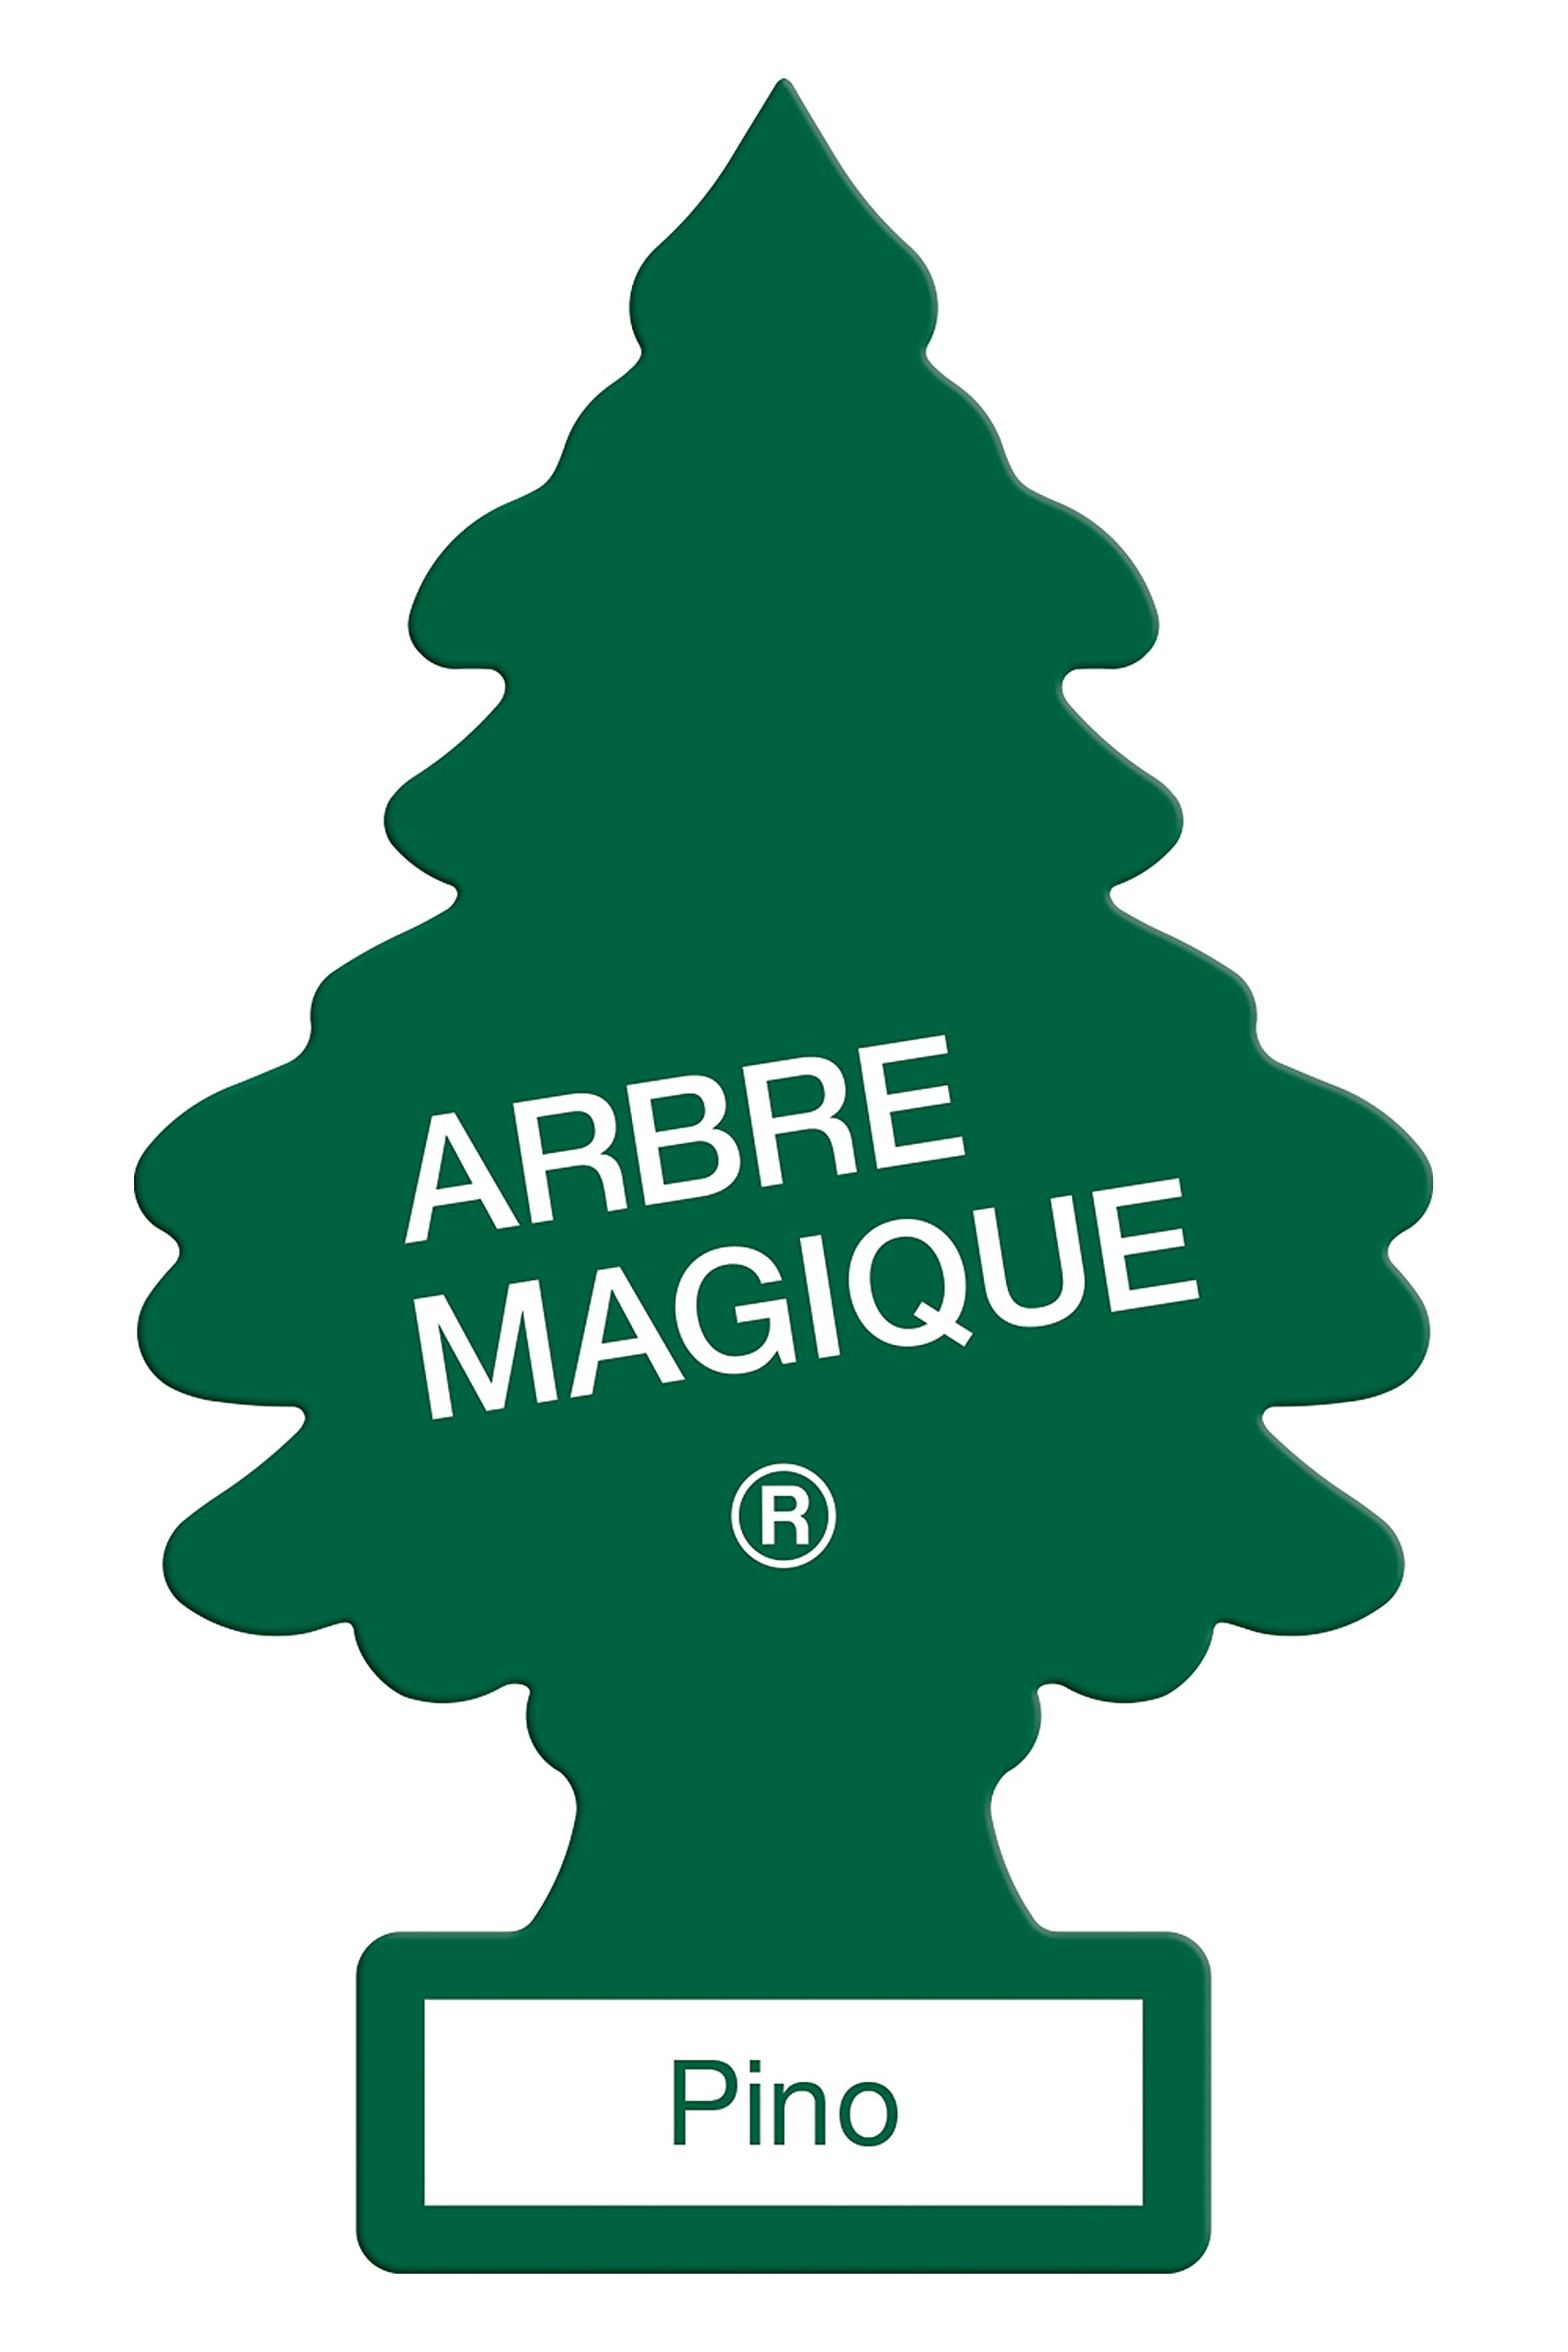 Arbre Magique Auto-Lufterfrischer, Kiefer-Duft, Pino, Grün von Abre Magic